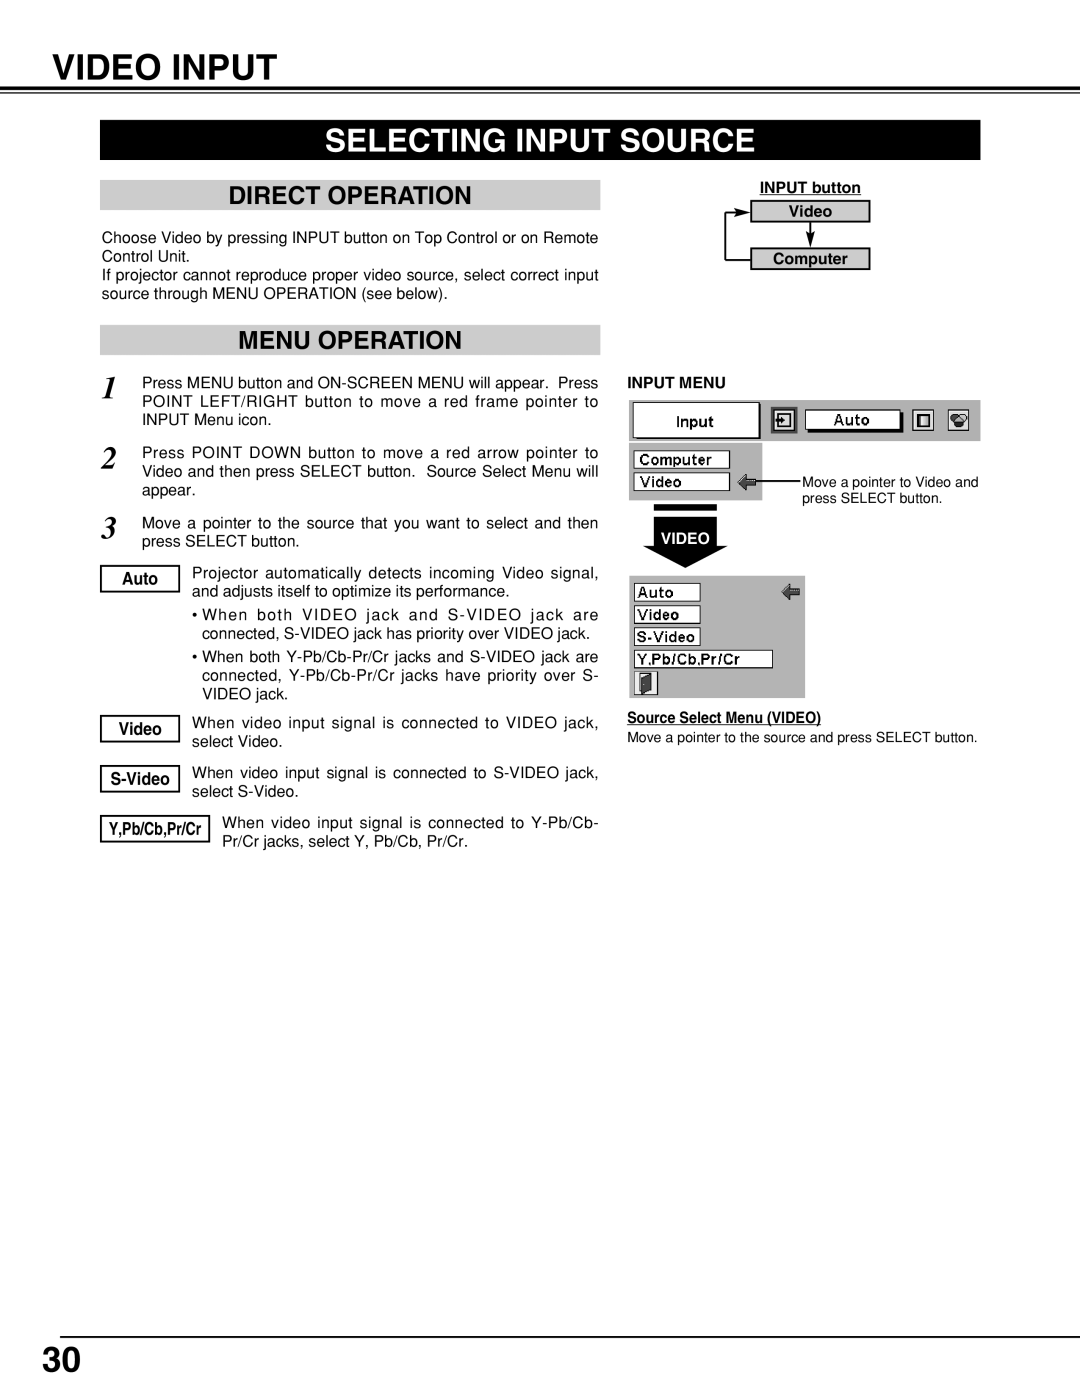 BOXLIGHT CP-18t manual Video Input, Selecting Input Source, Direct Operation, Menu Operation, INPUT button Video Computer 